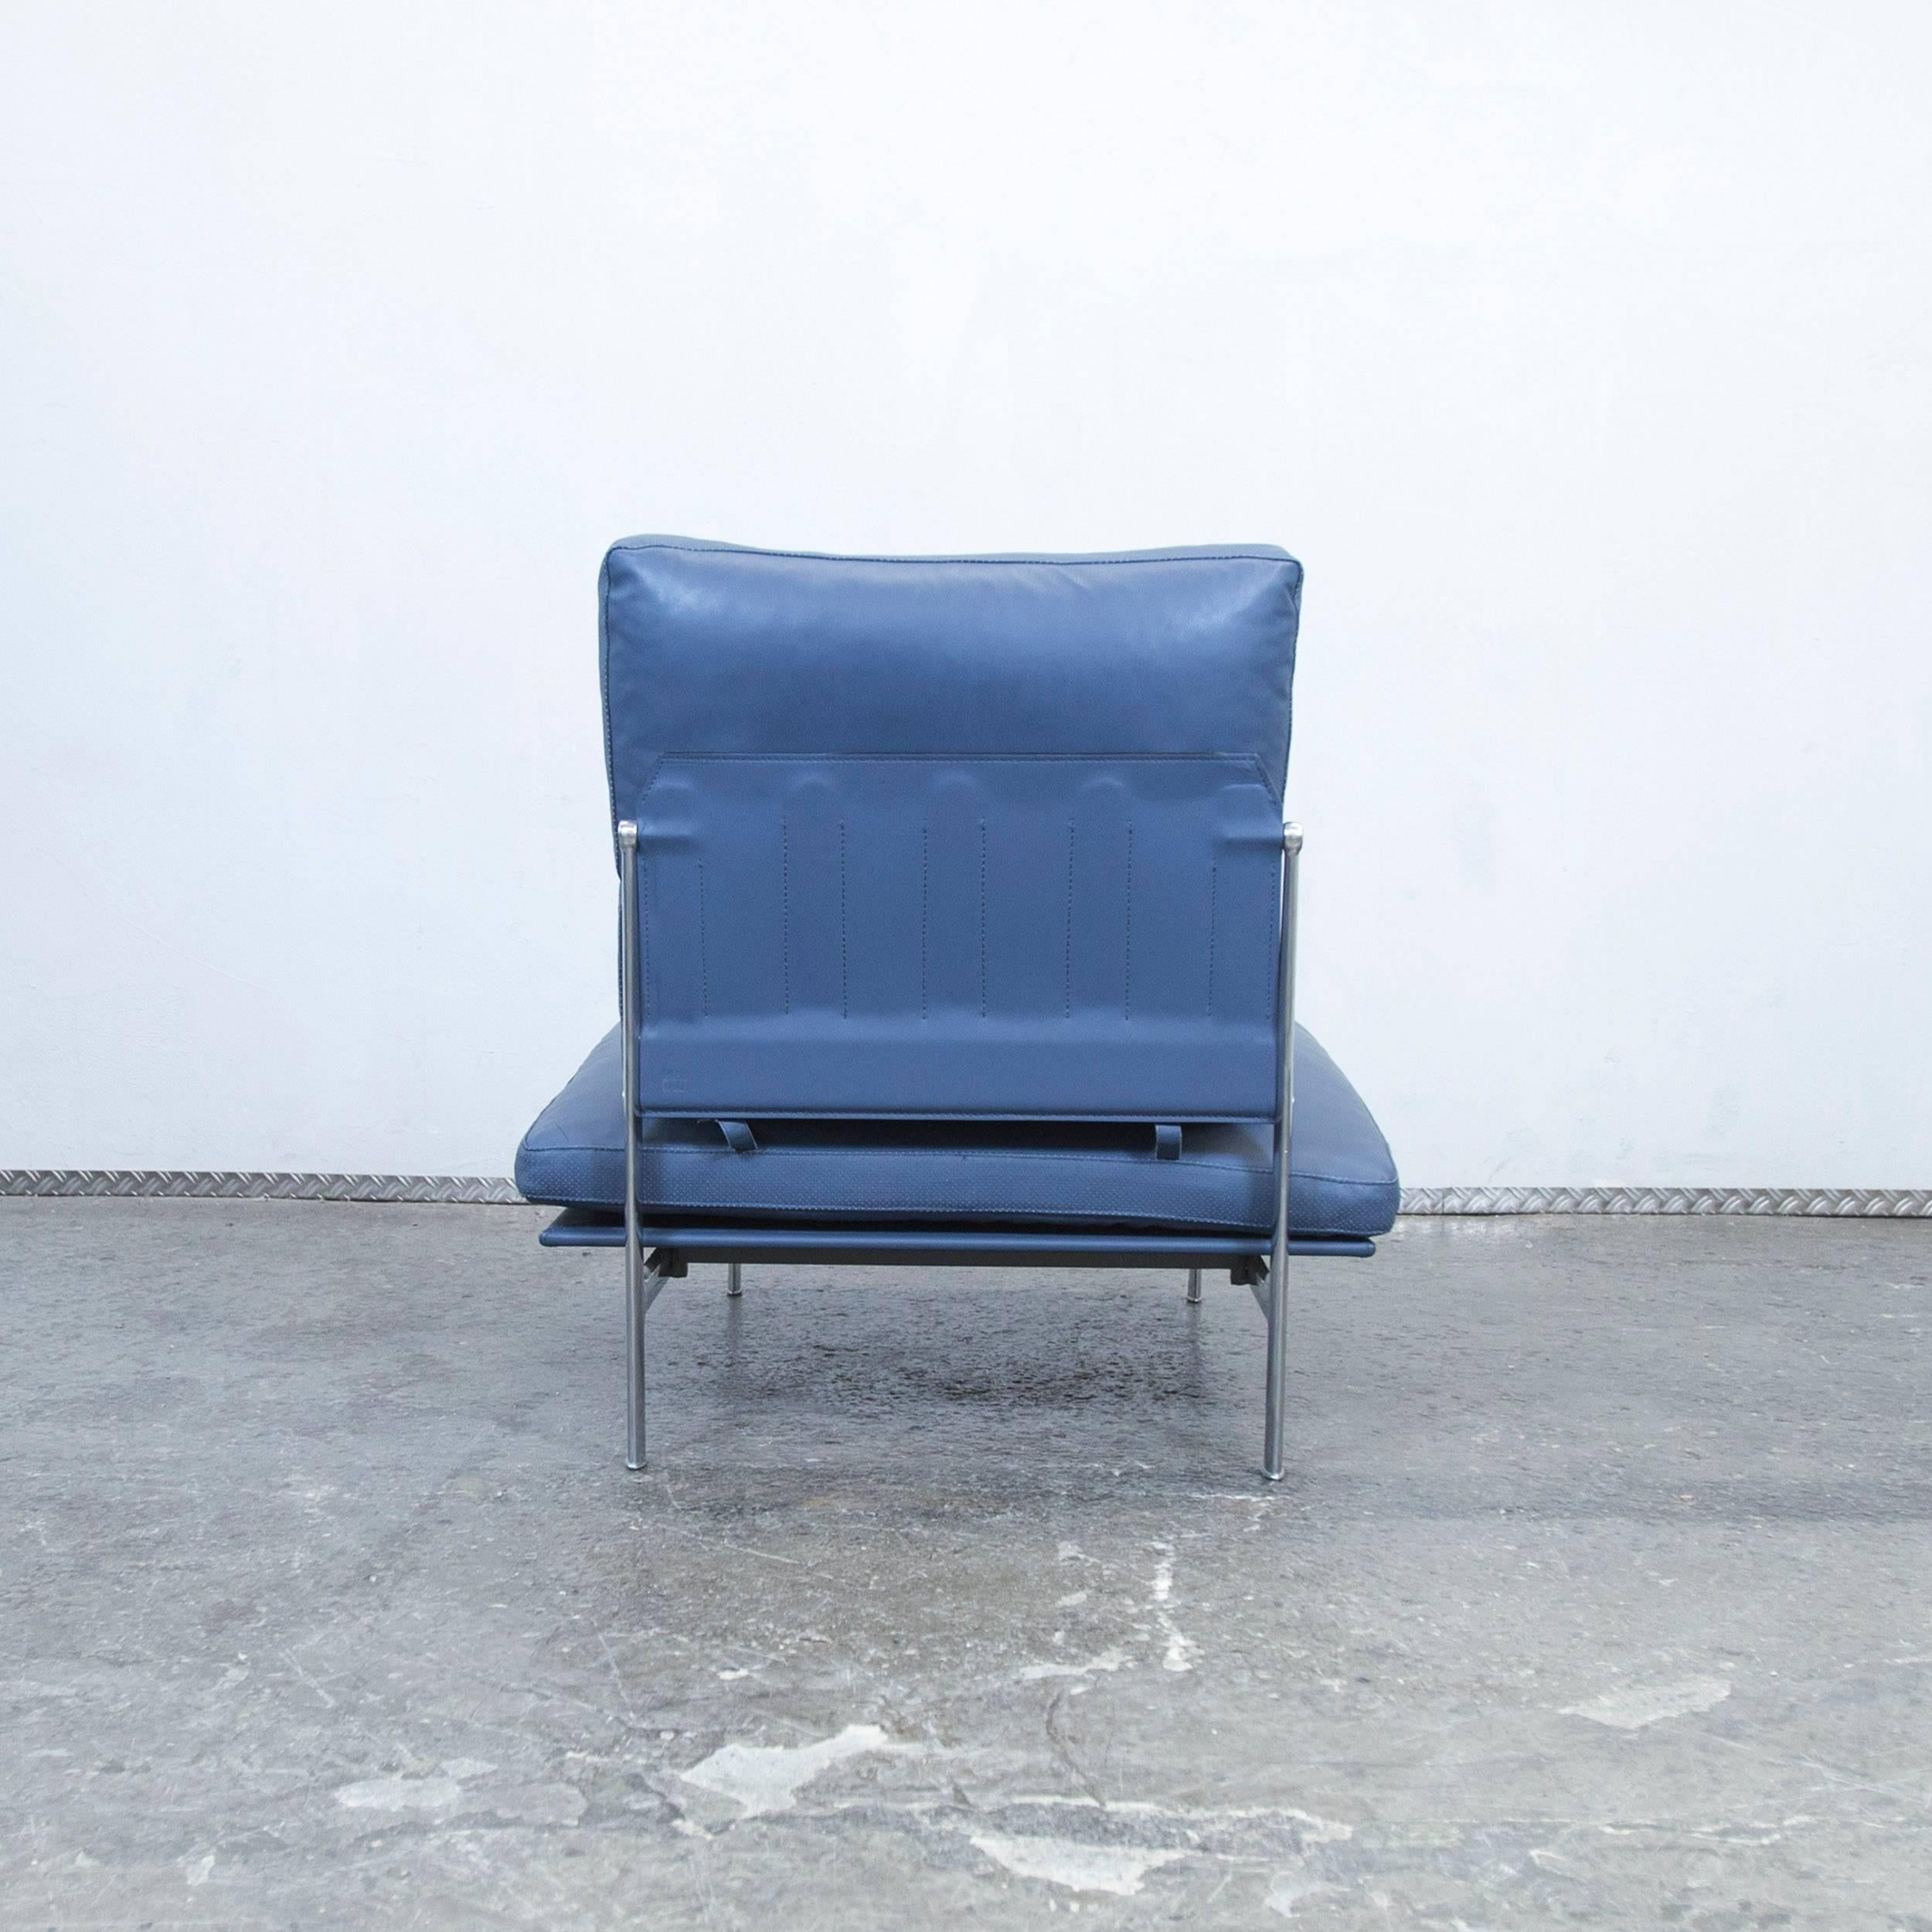 B&B Italia Diesis Designer Chair Blue Leather Oneseater Couch Modern 2